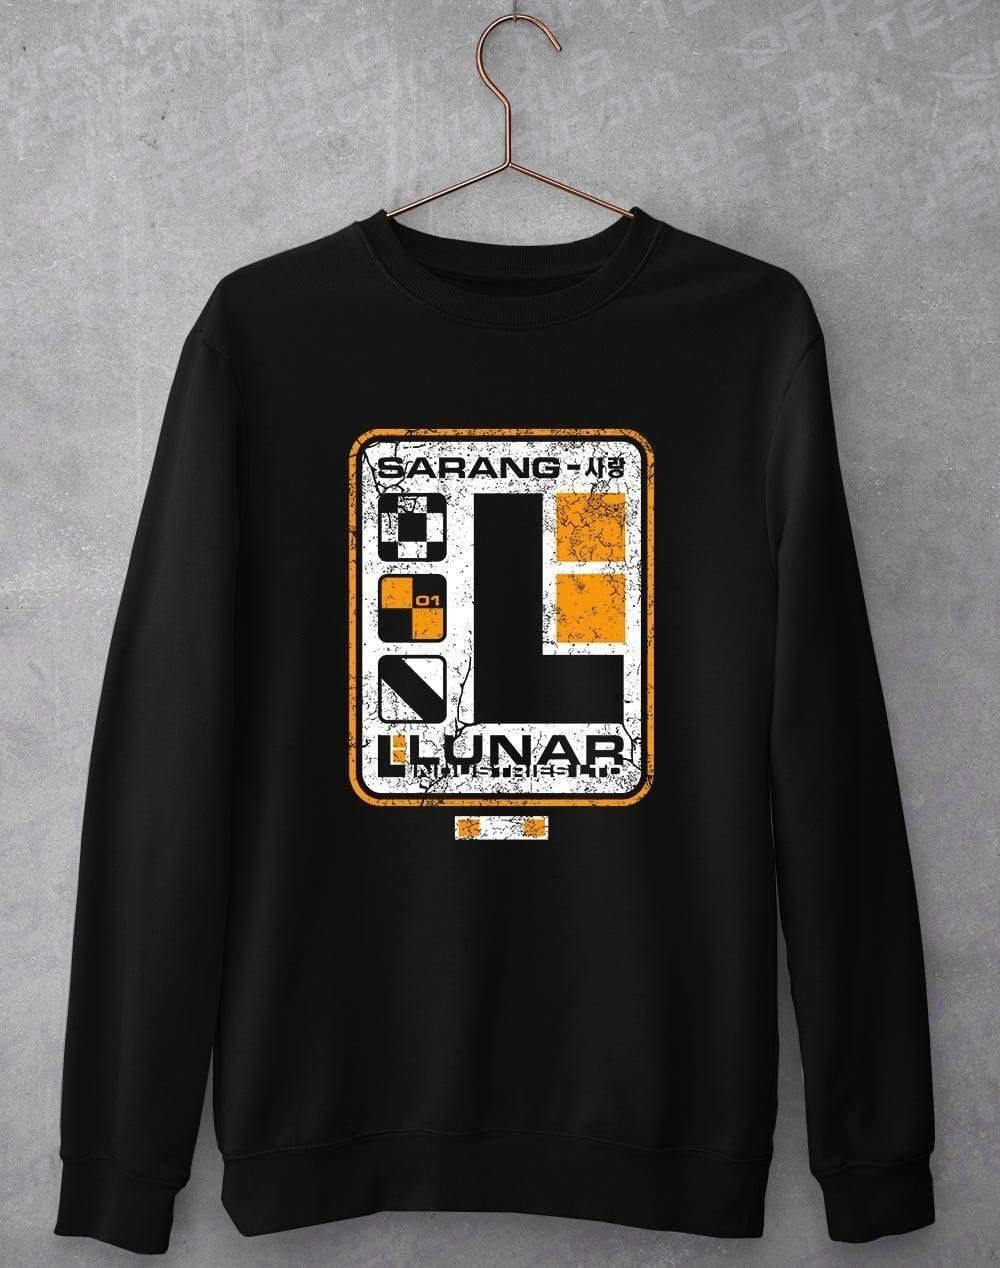 Lunar Industries Sweatshirt S / Black  - Off World Tees